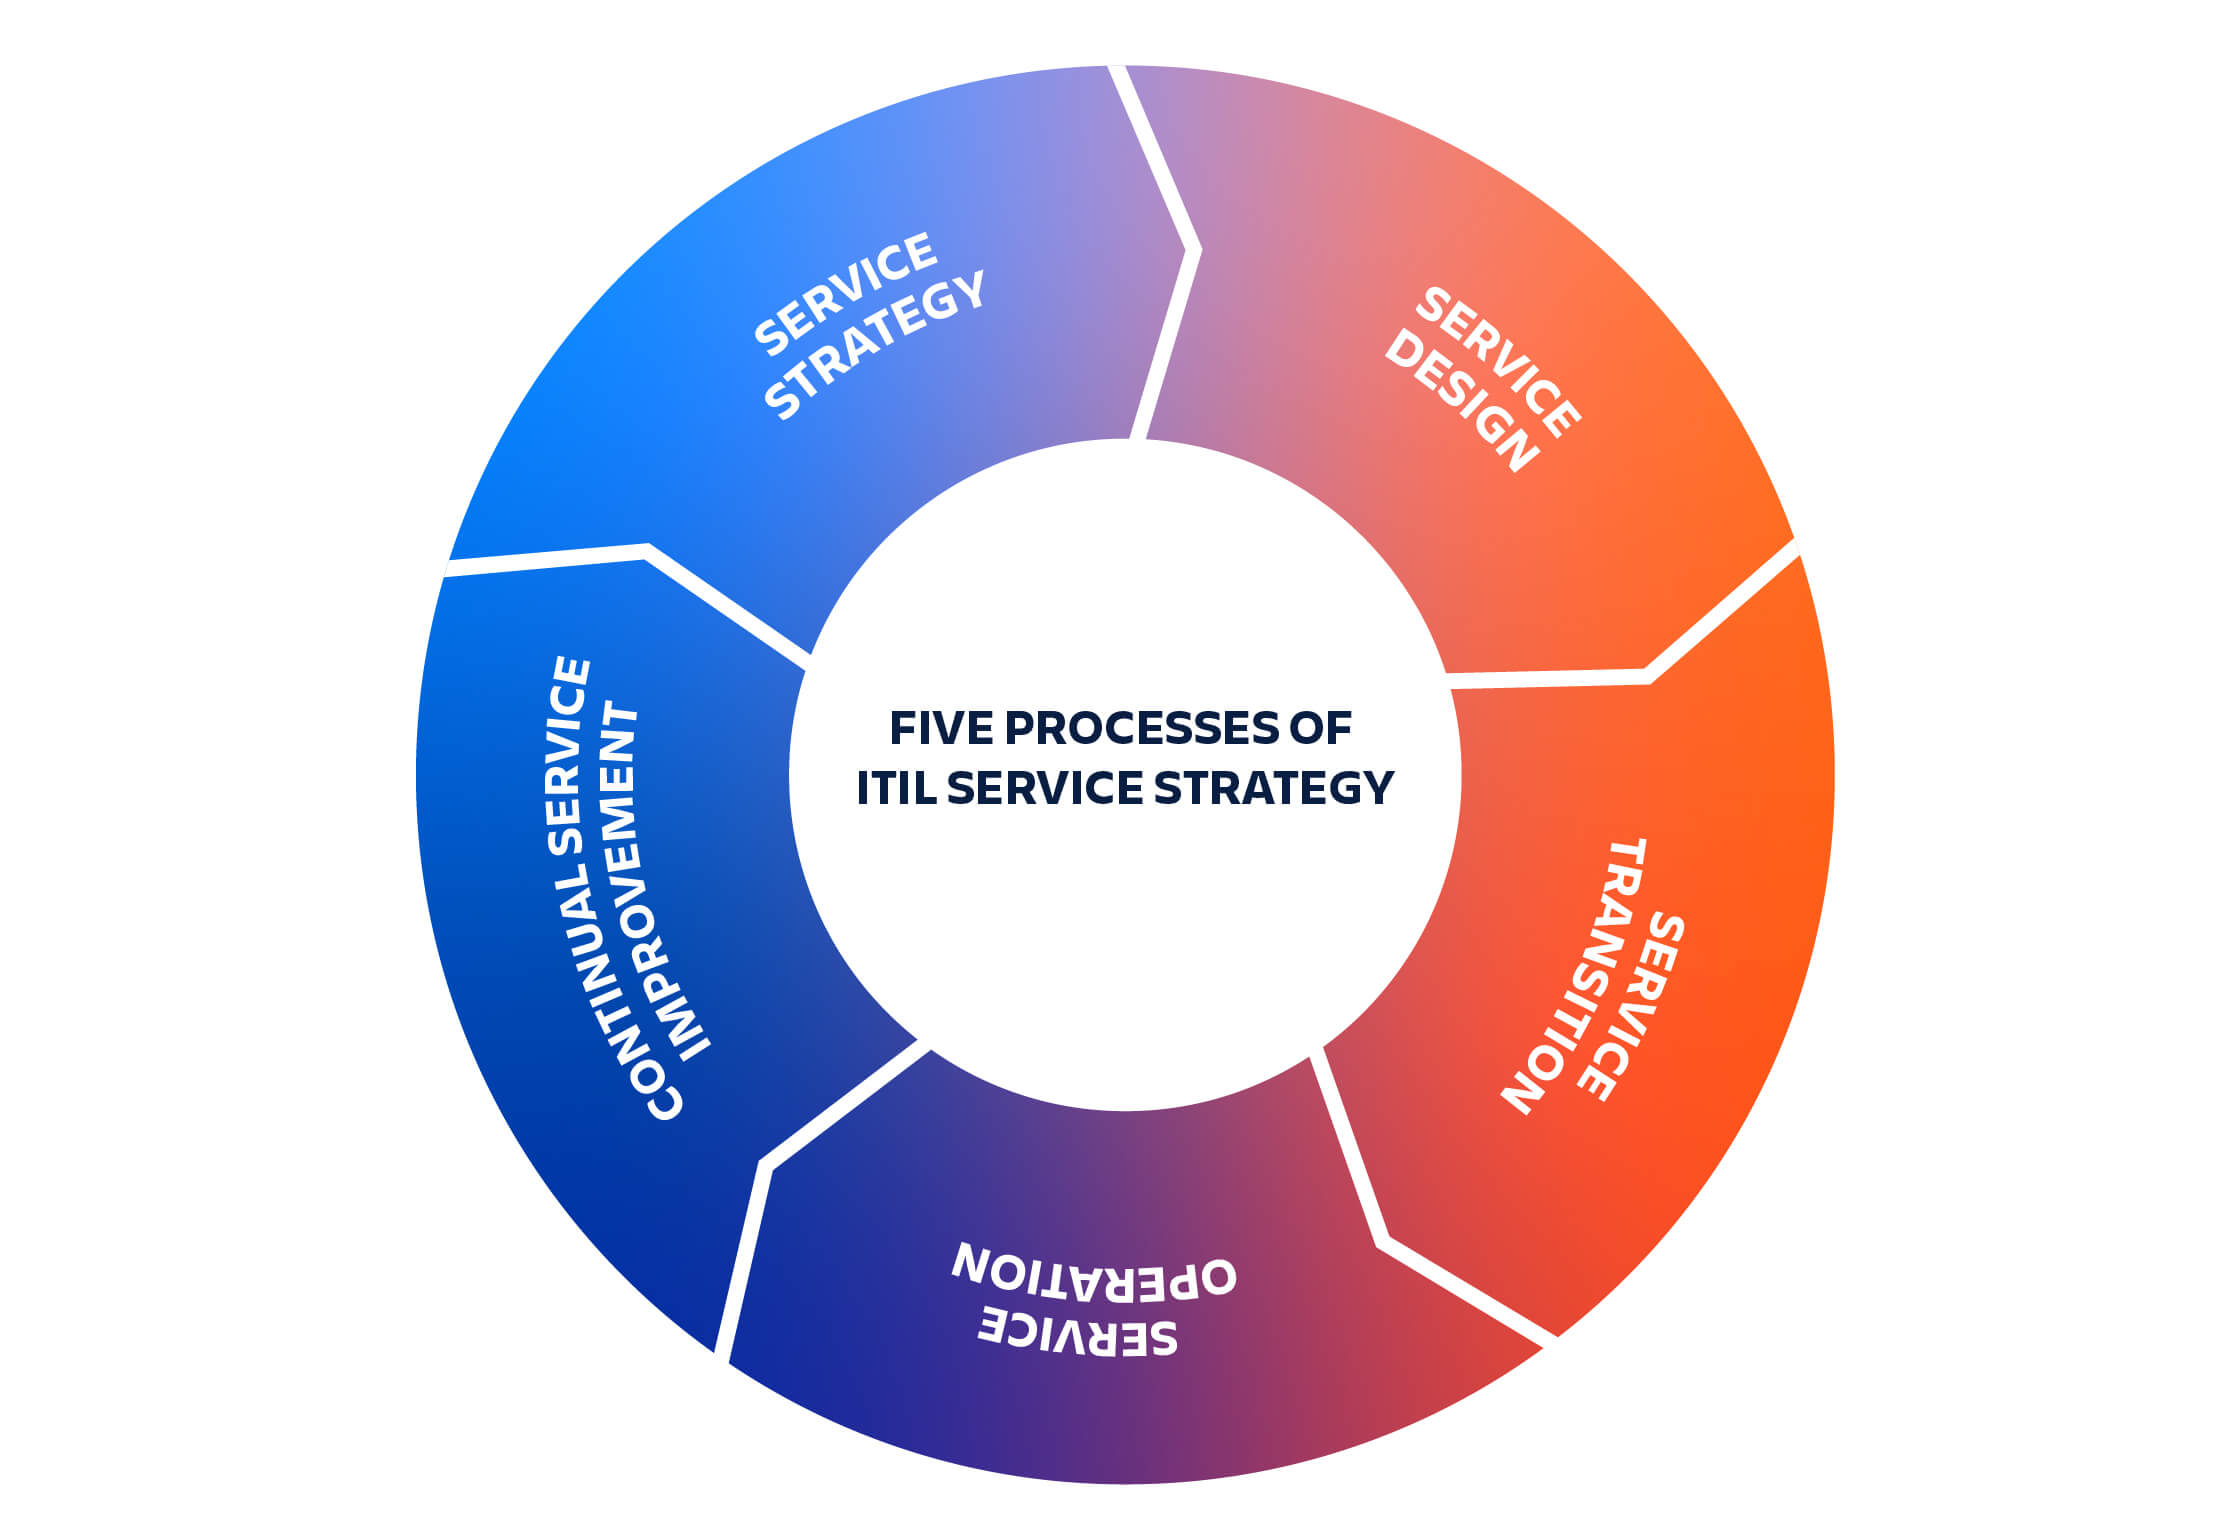 Five processes of ITIL service strategy: Service Strategy flows into Service Design into Service Transition into Service Operation into Continual Service Improvement